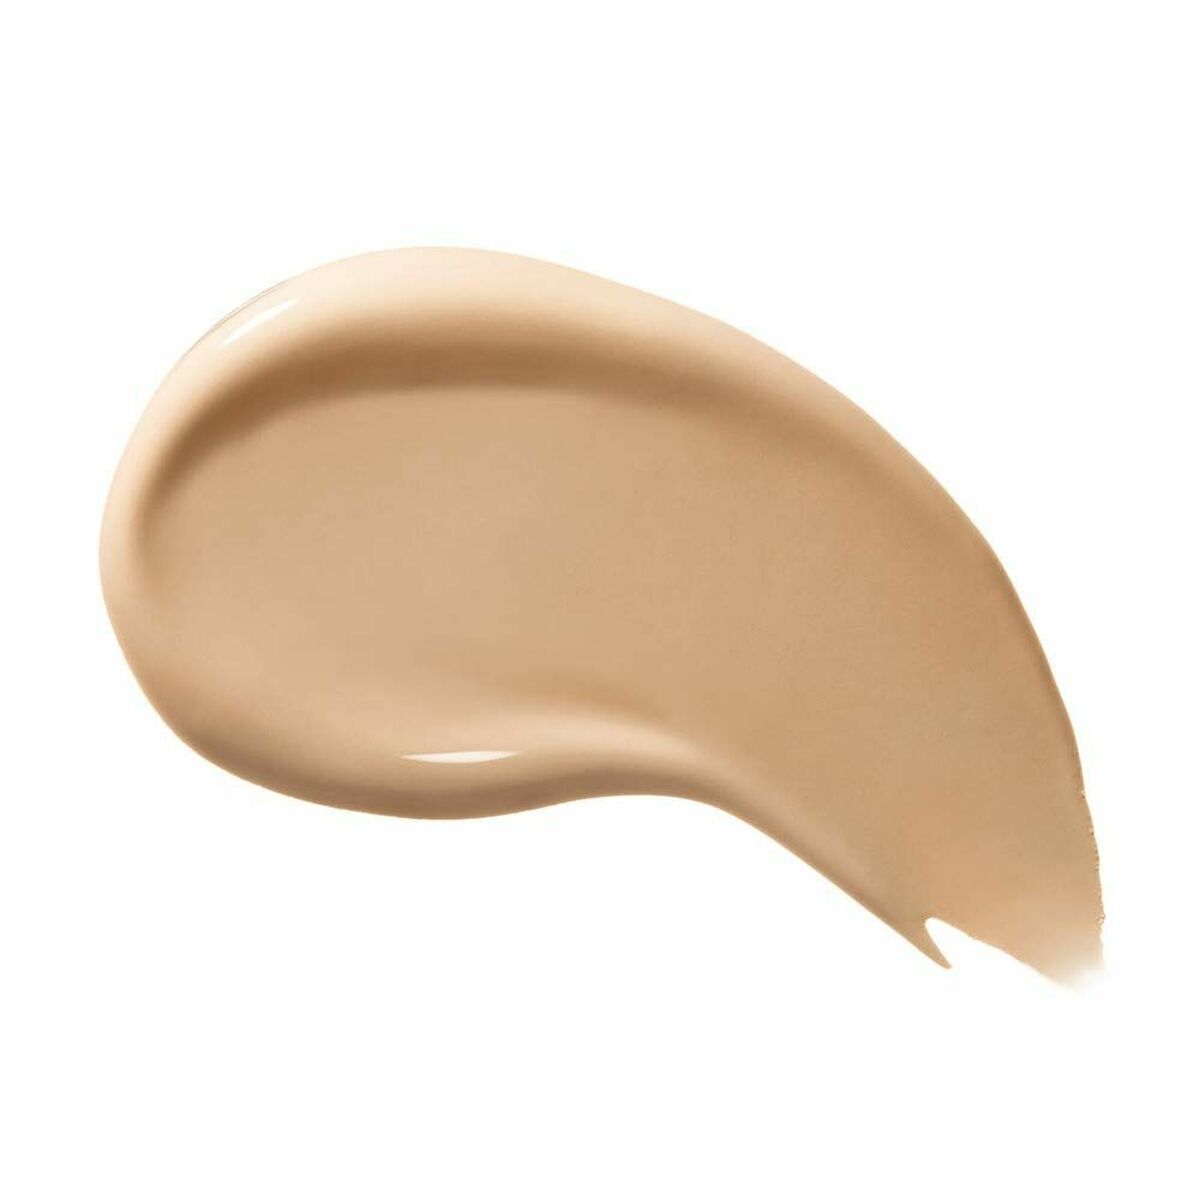 Liquid Make Up Base Shiseido Synchro Skin Radiant Lifting Nº 260 Cashmere 30 ml